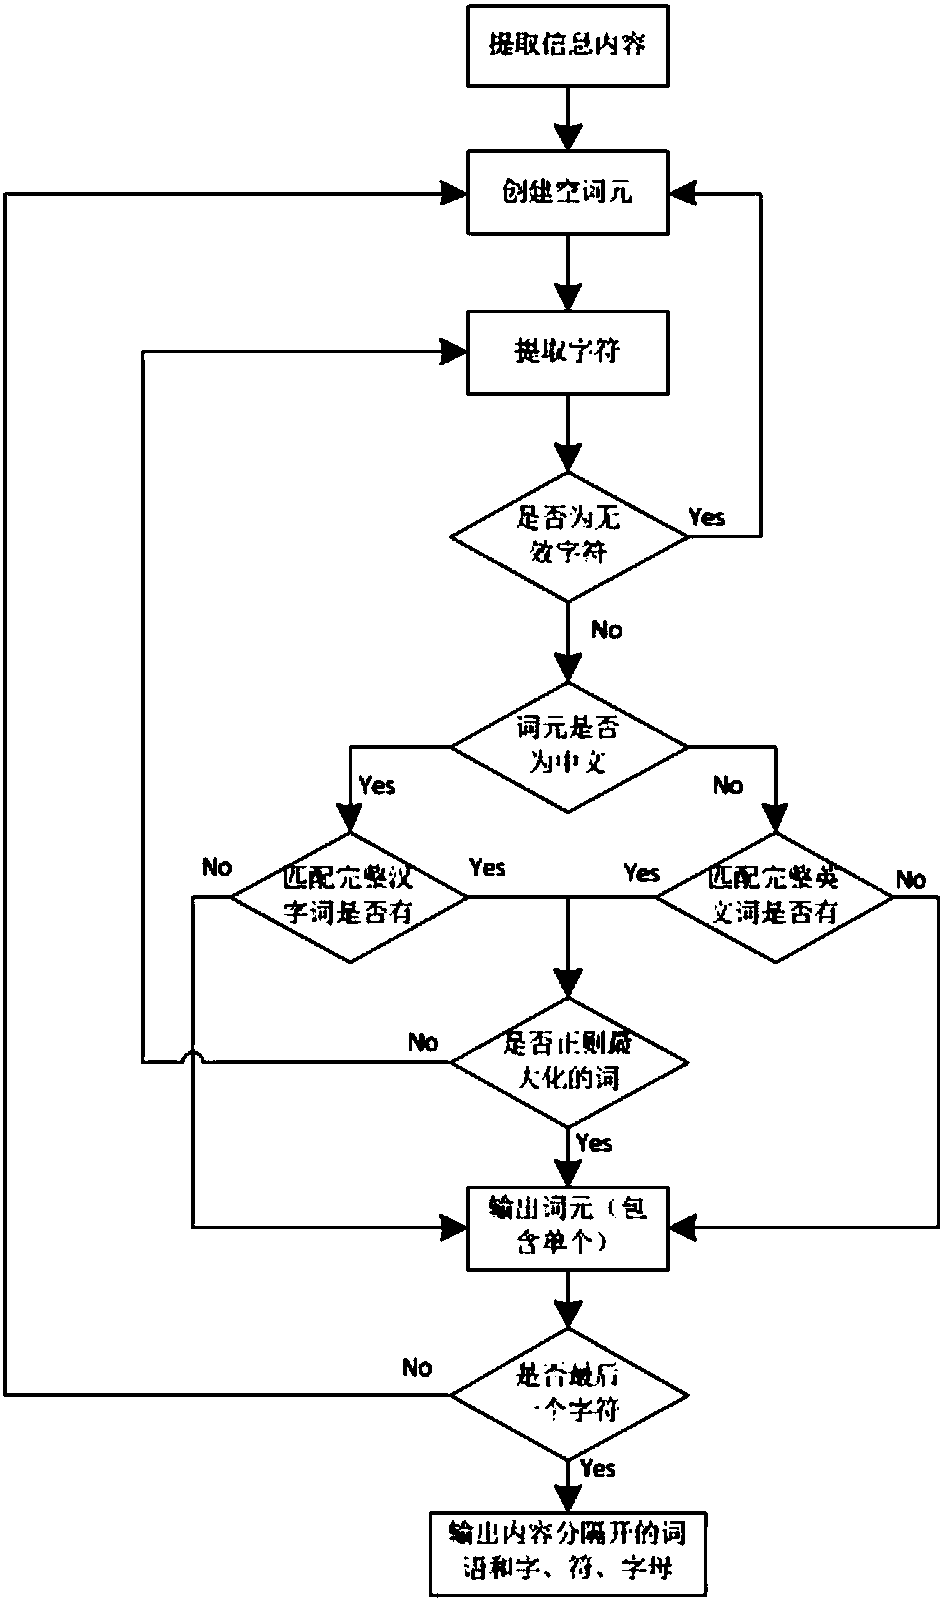 Compression implementation method for Beidou satellite information transmission